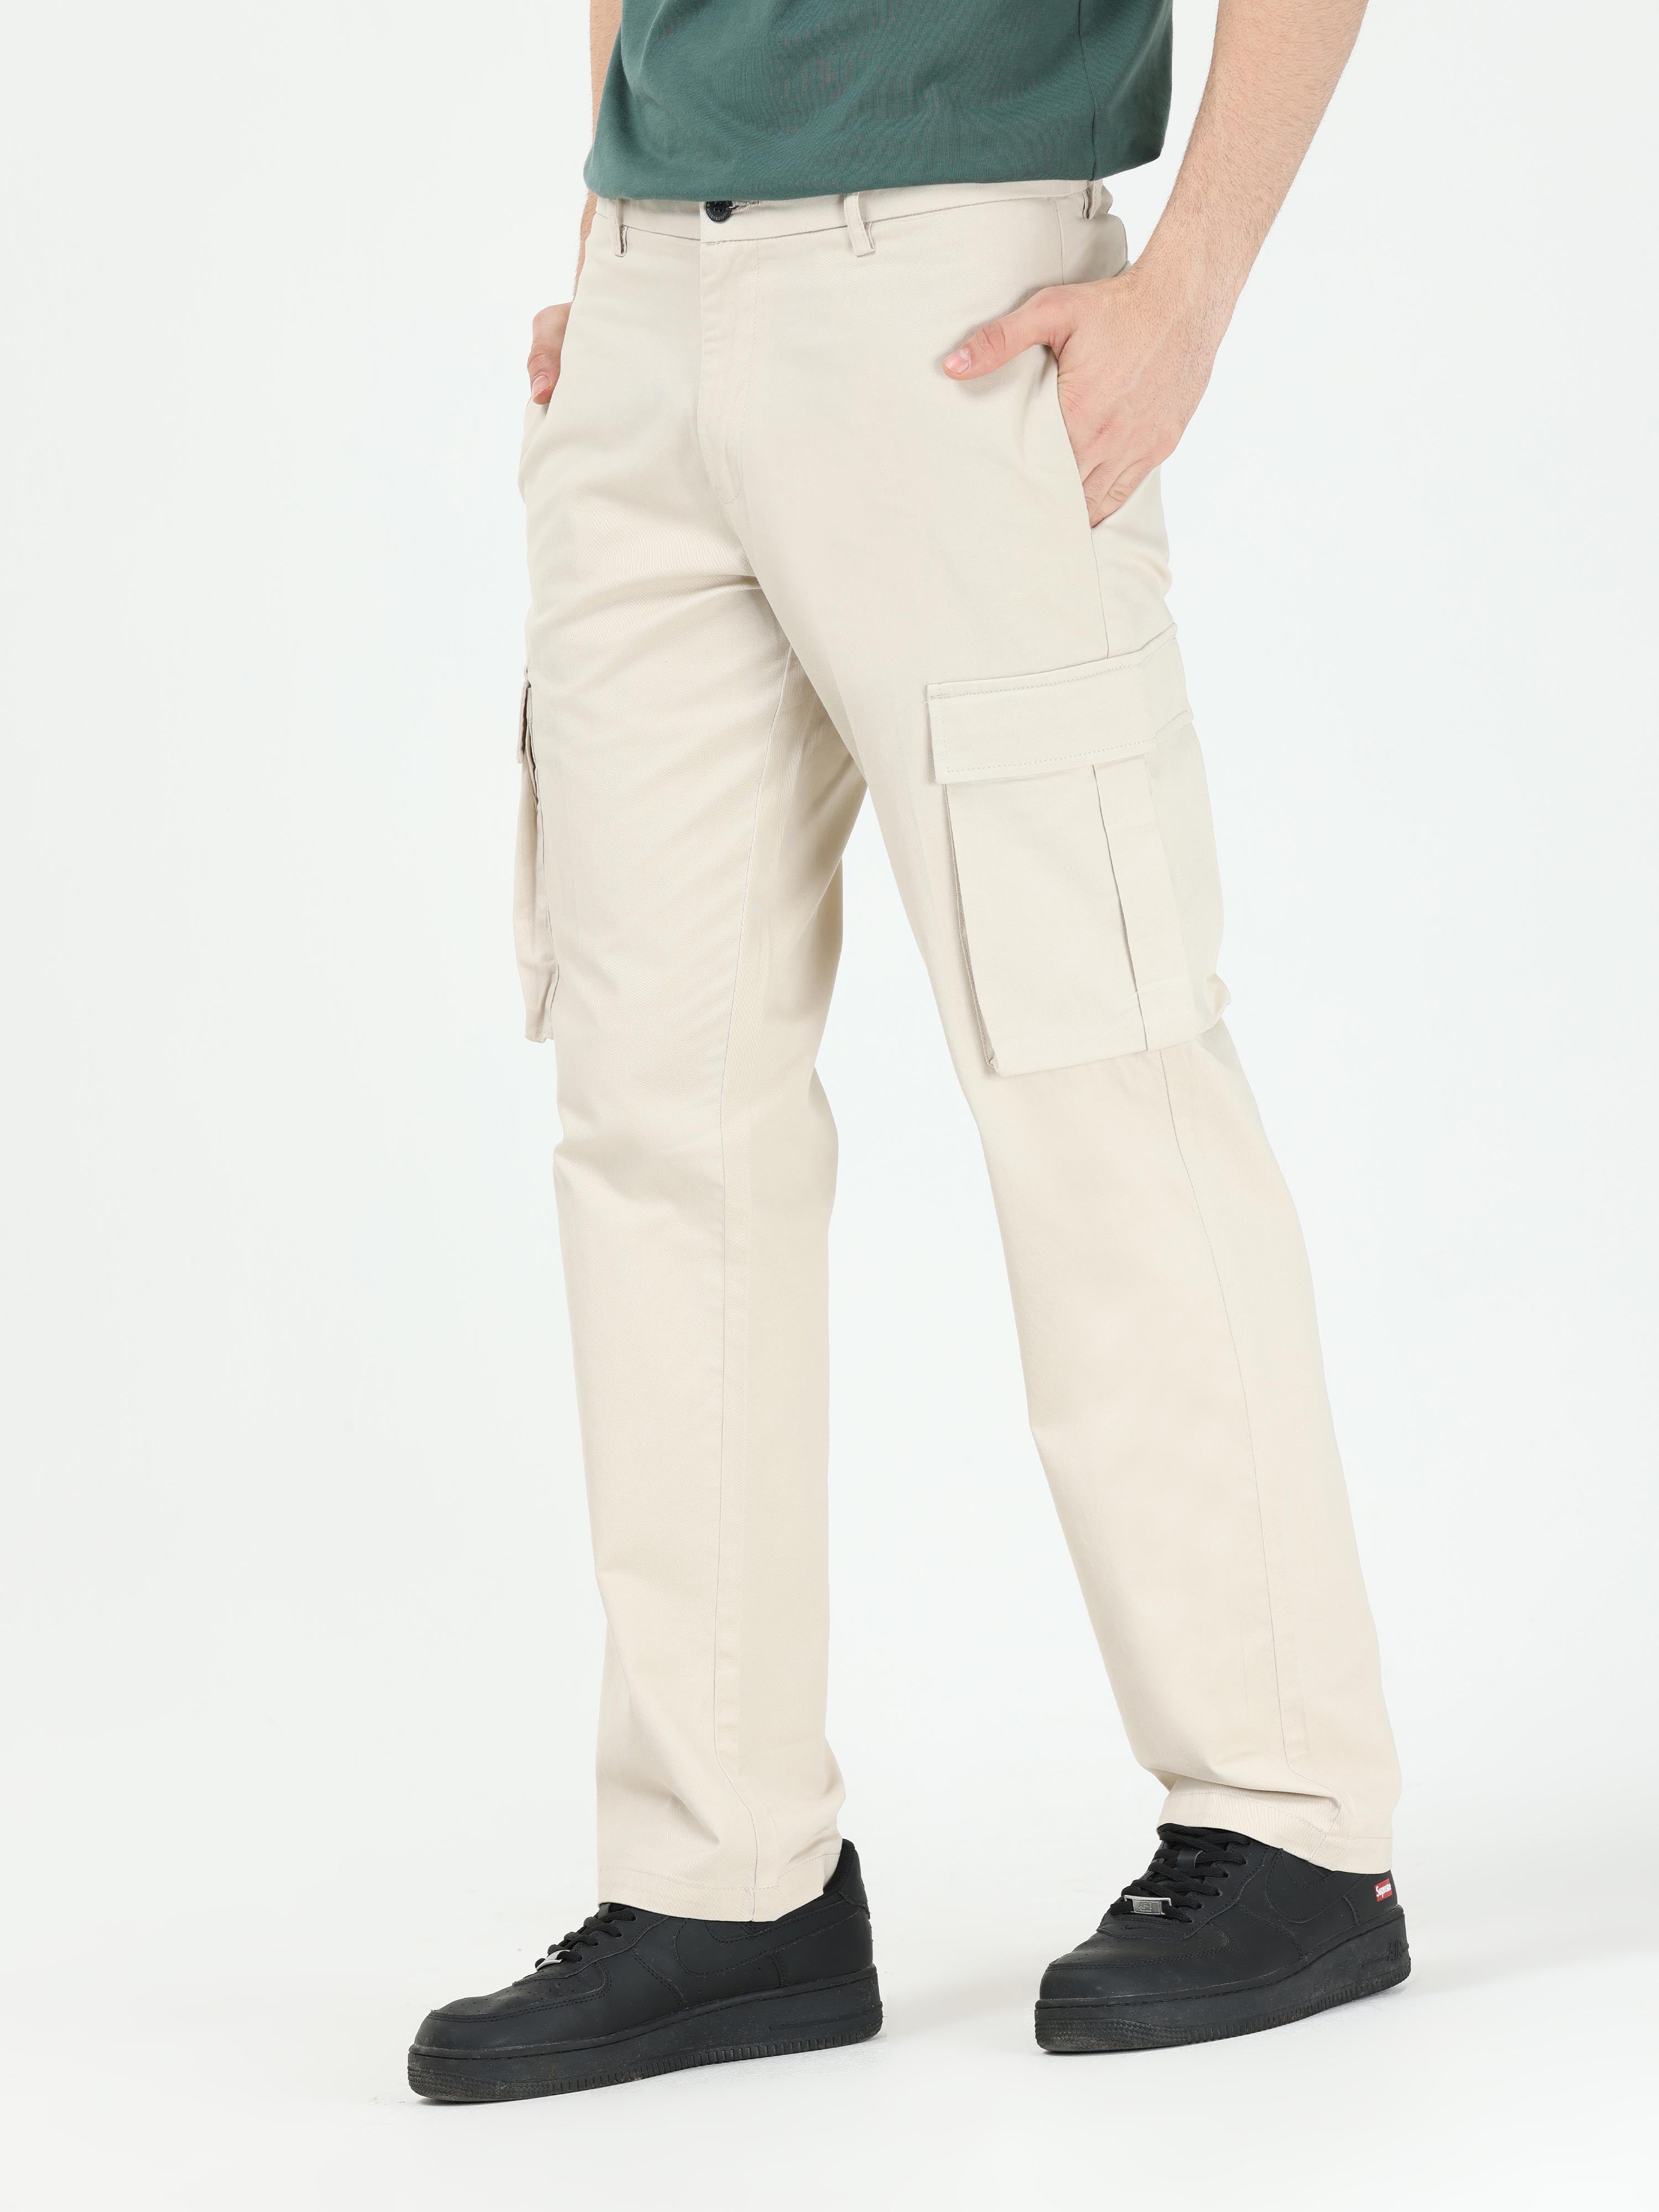 EIGHTYFIVE BAGGY PANTS - Cargo trousers - beige - Zalando.de